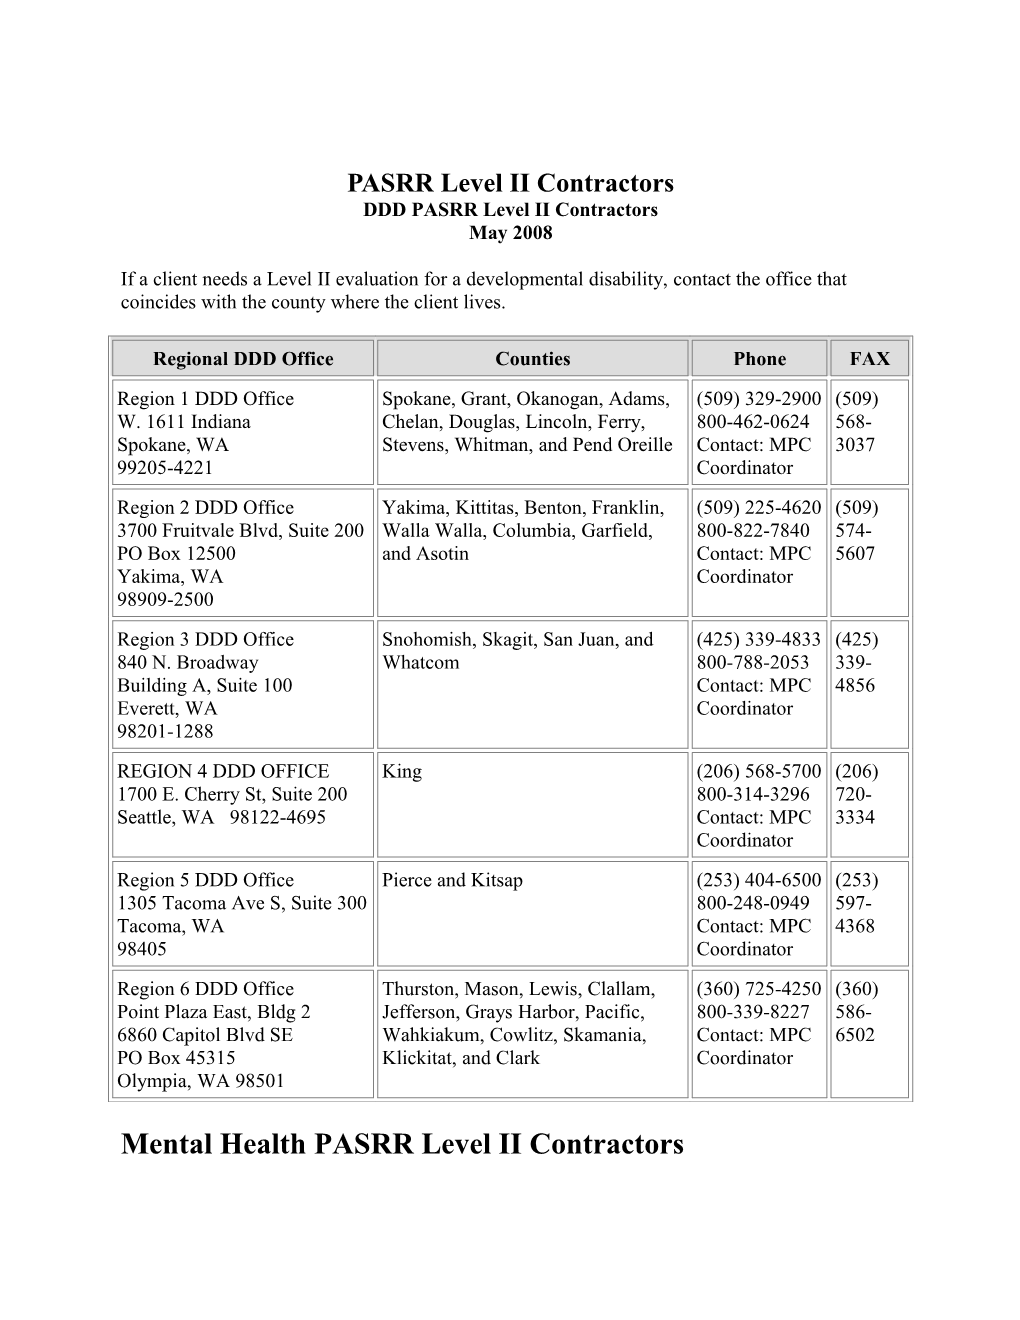 DDD PASRR Level II Contractors